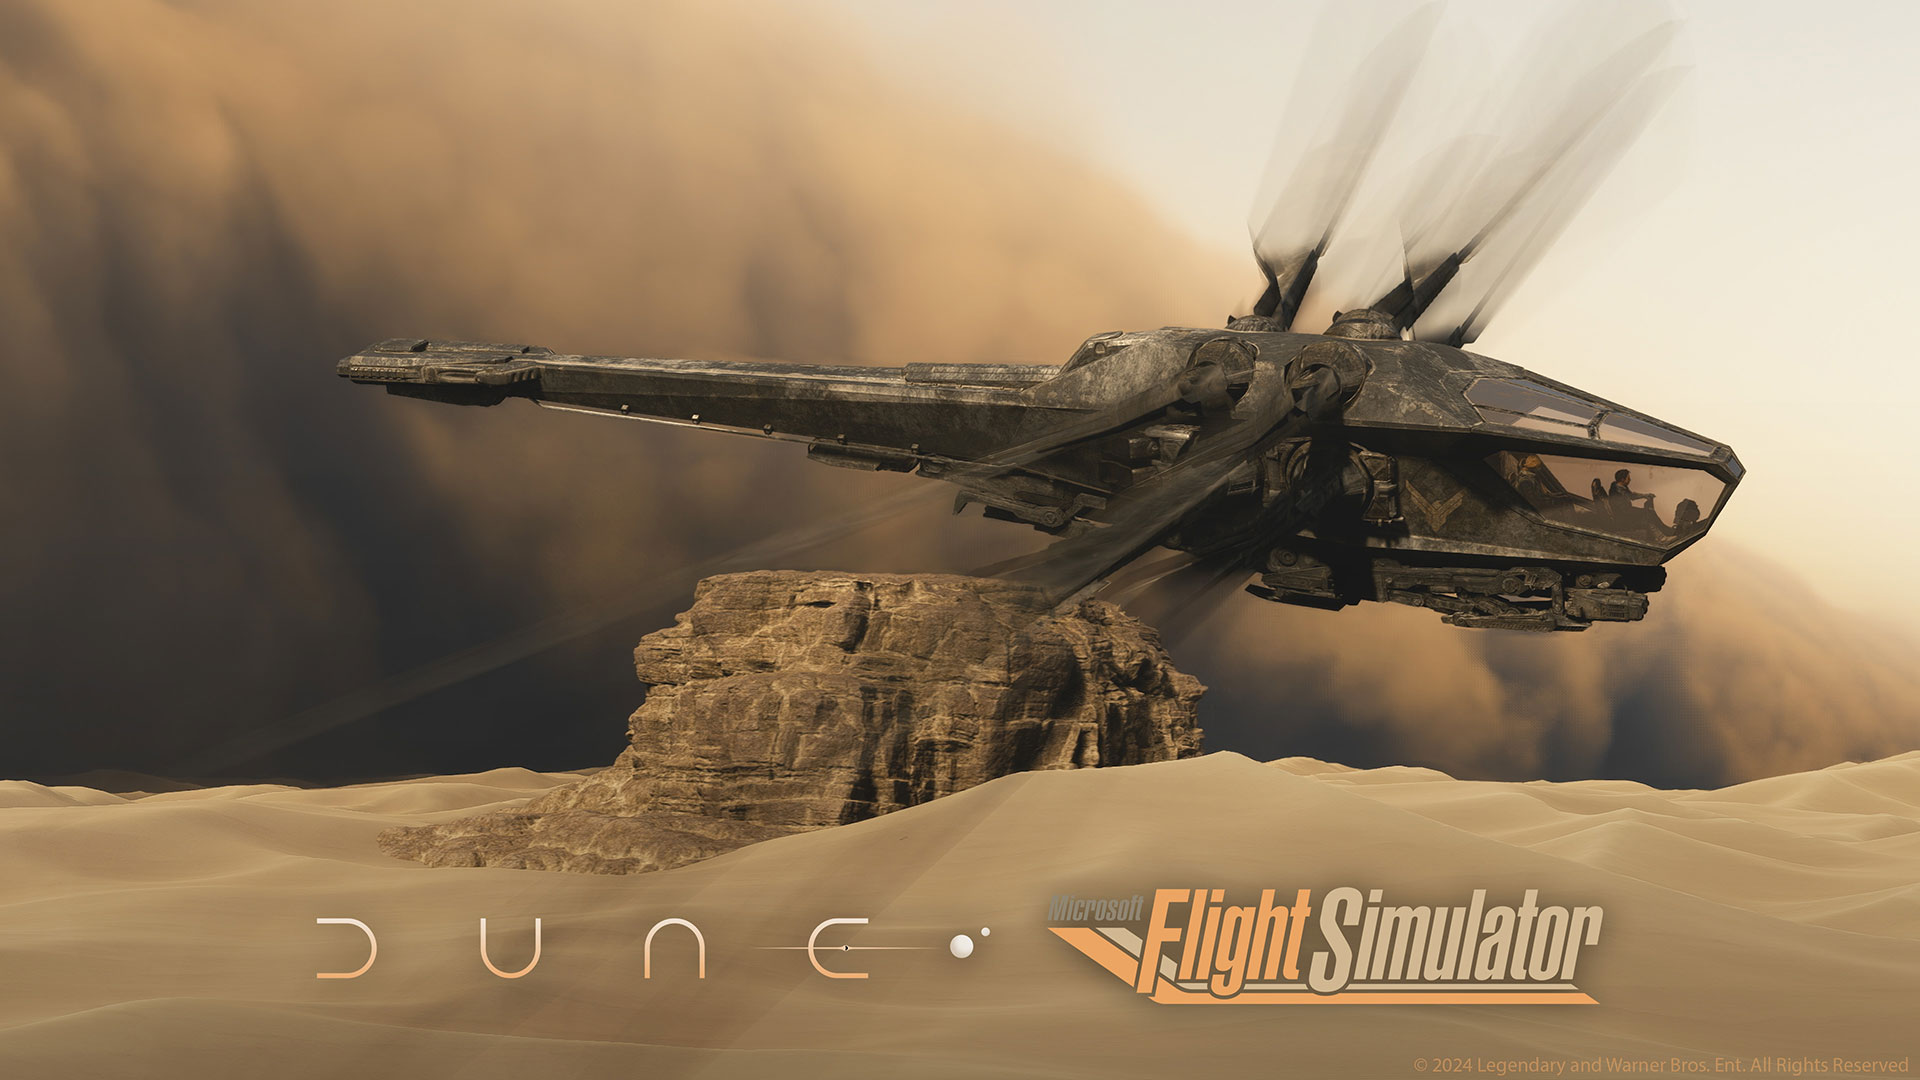 Microsoft Flight Simulator players can explore the world of Arrakis